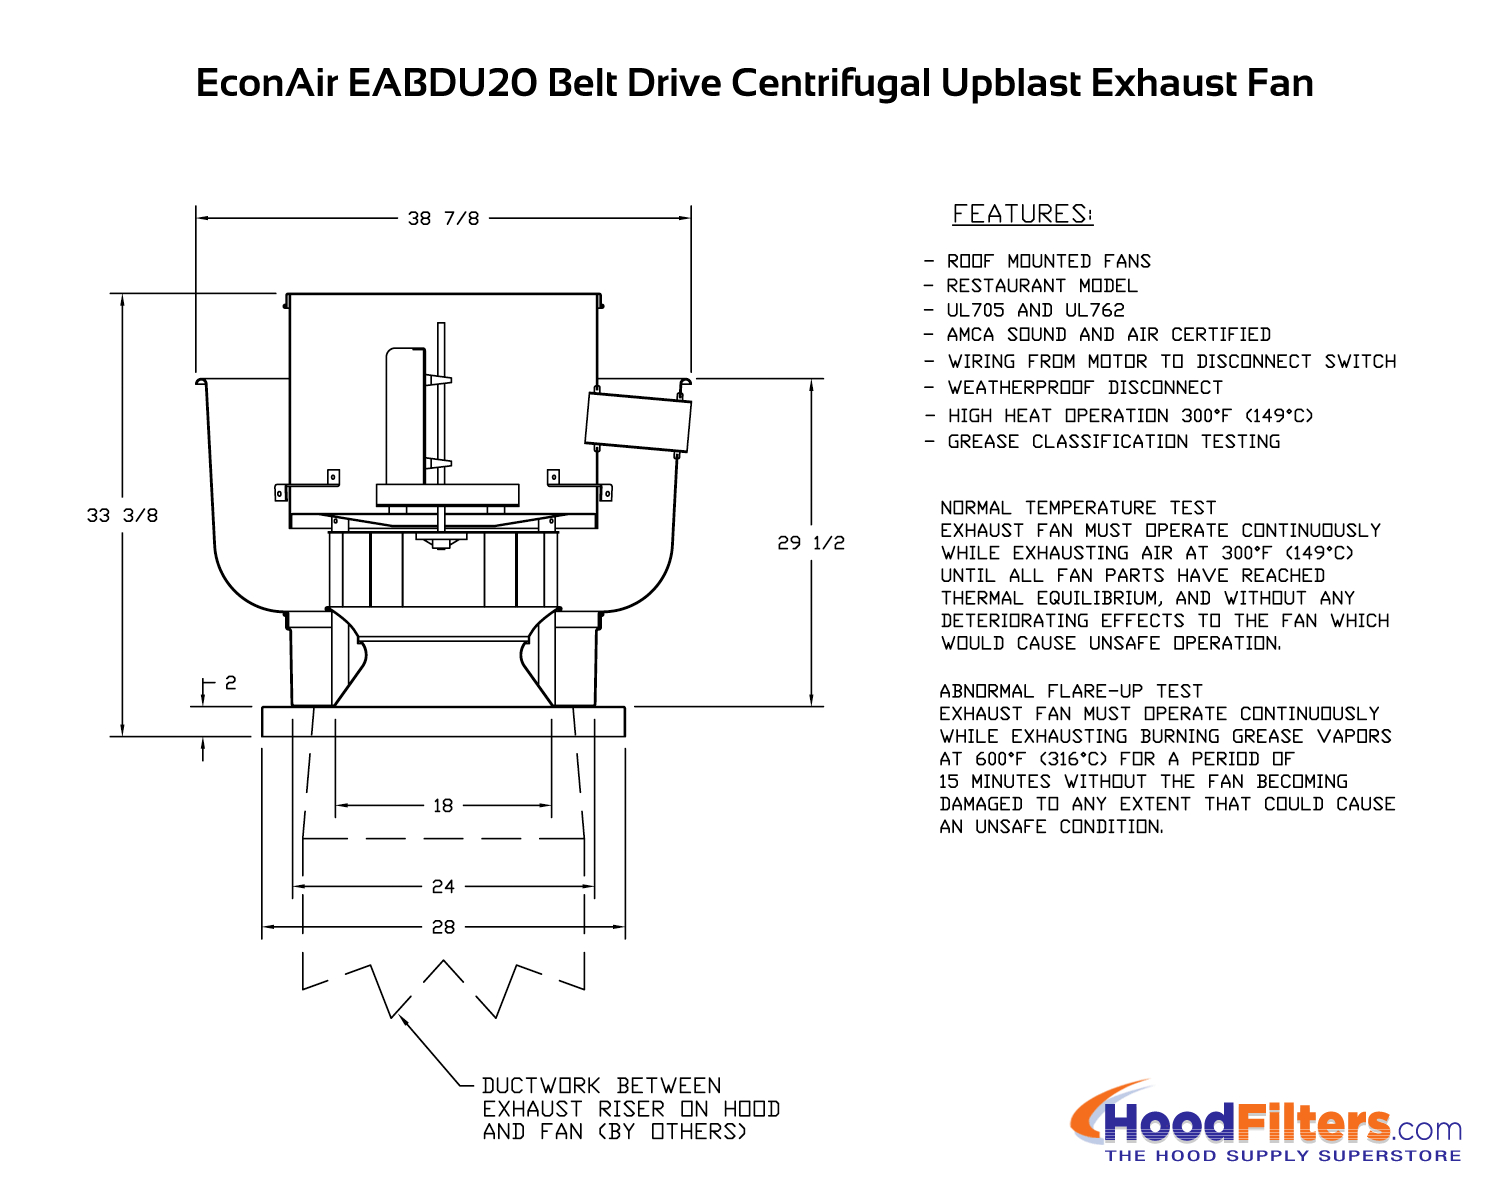 4000 Cfm Belt Drive Upblast Exhaust Fan With 2075 Wheel for measurements 1500 X 1200